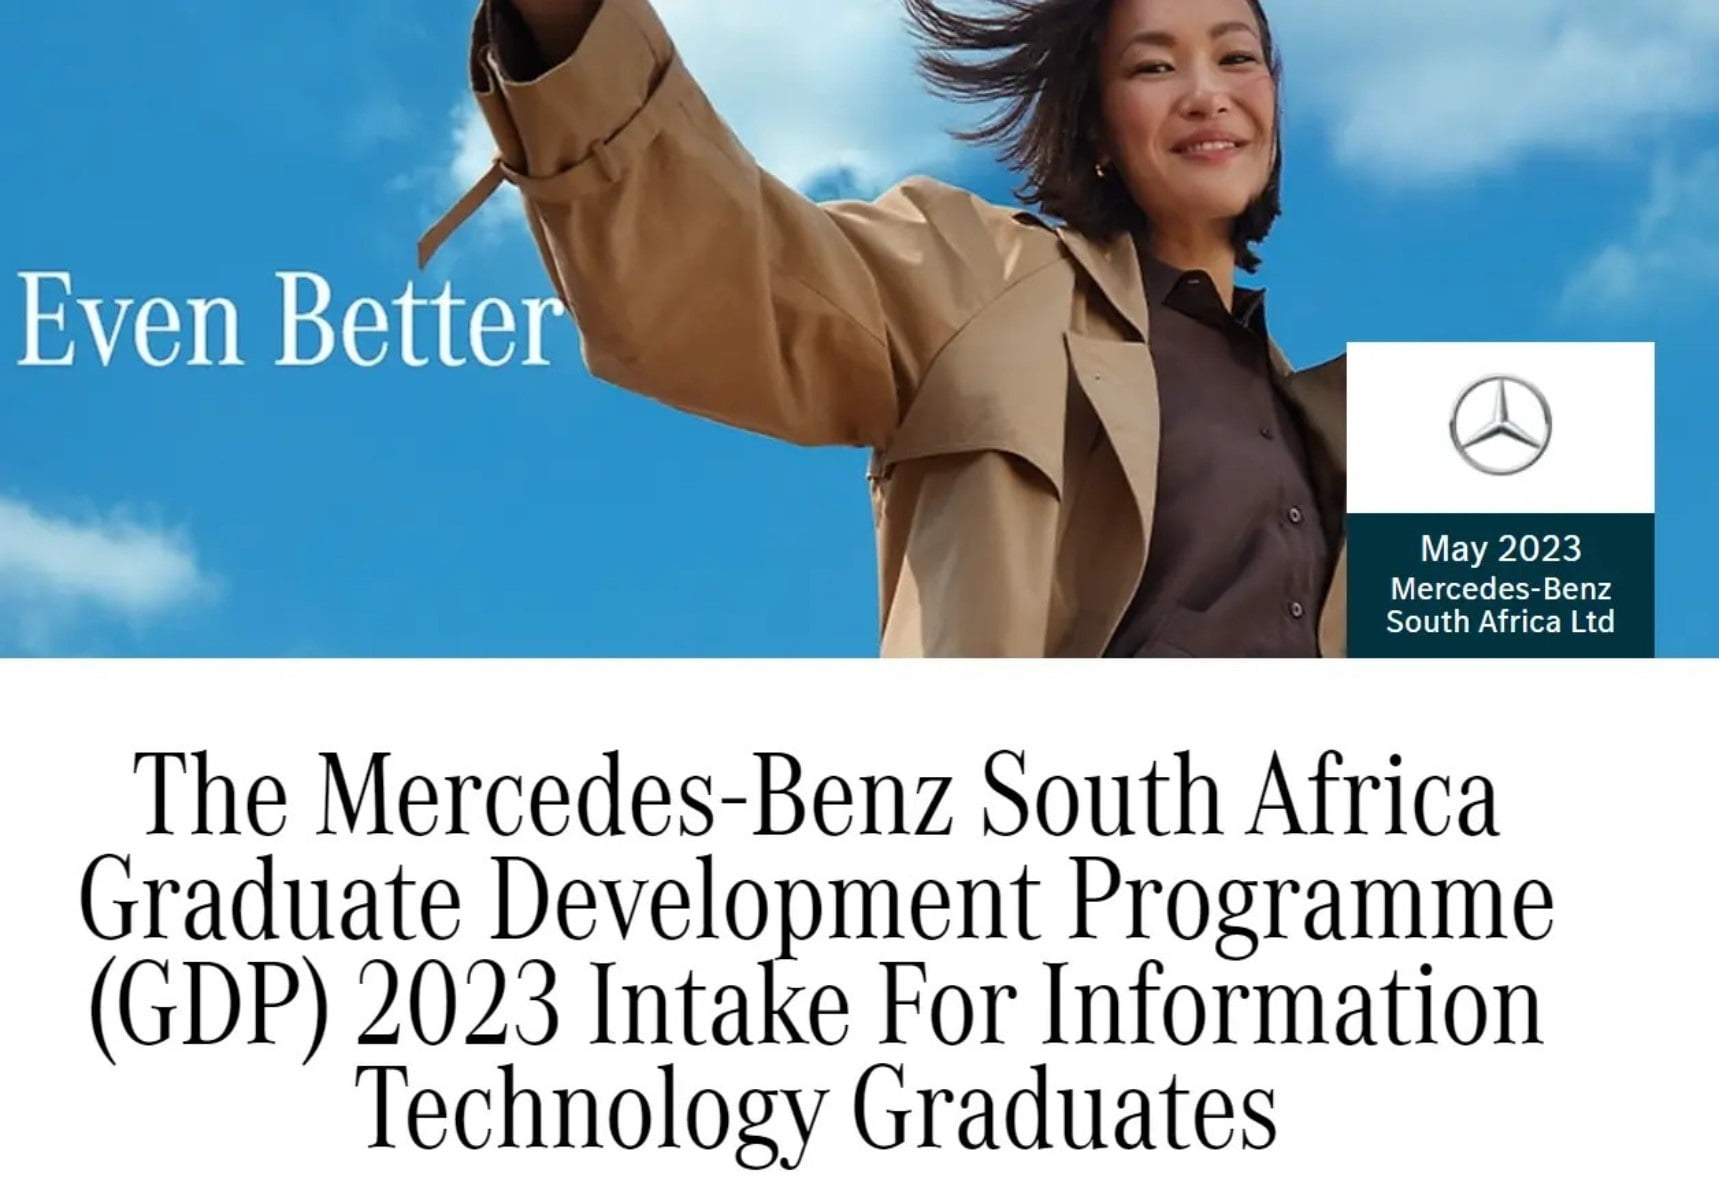 MercedesBenz Graduate Development Programme 2023 in South Africa